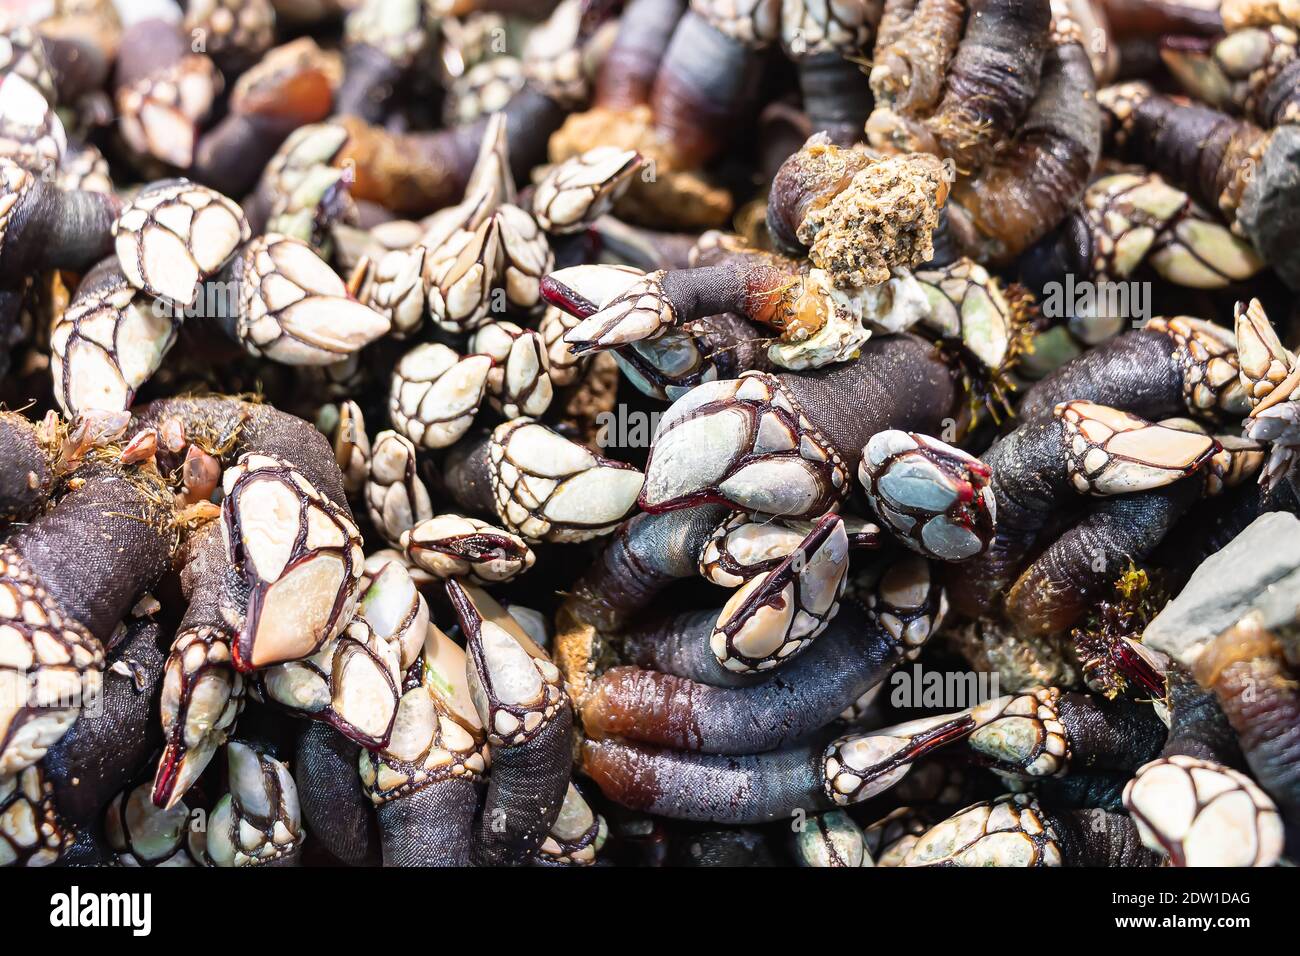 Many fresh barnacles (pedunculata) for sale at a fish market in Huelva, Spain Stock Photo